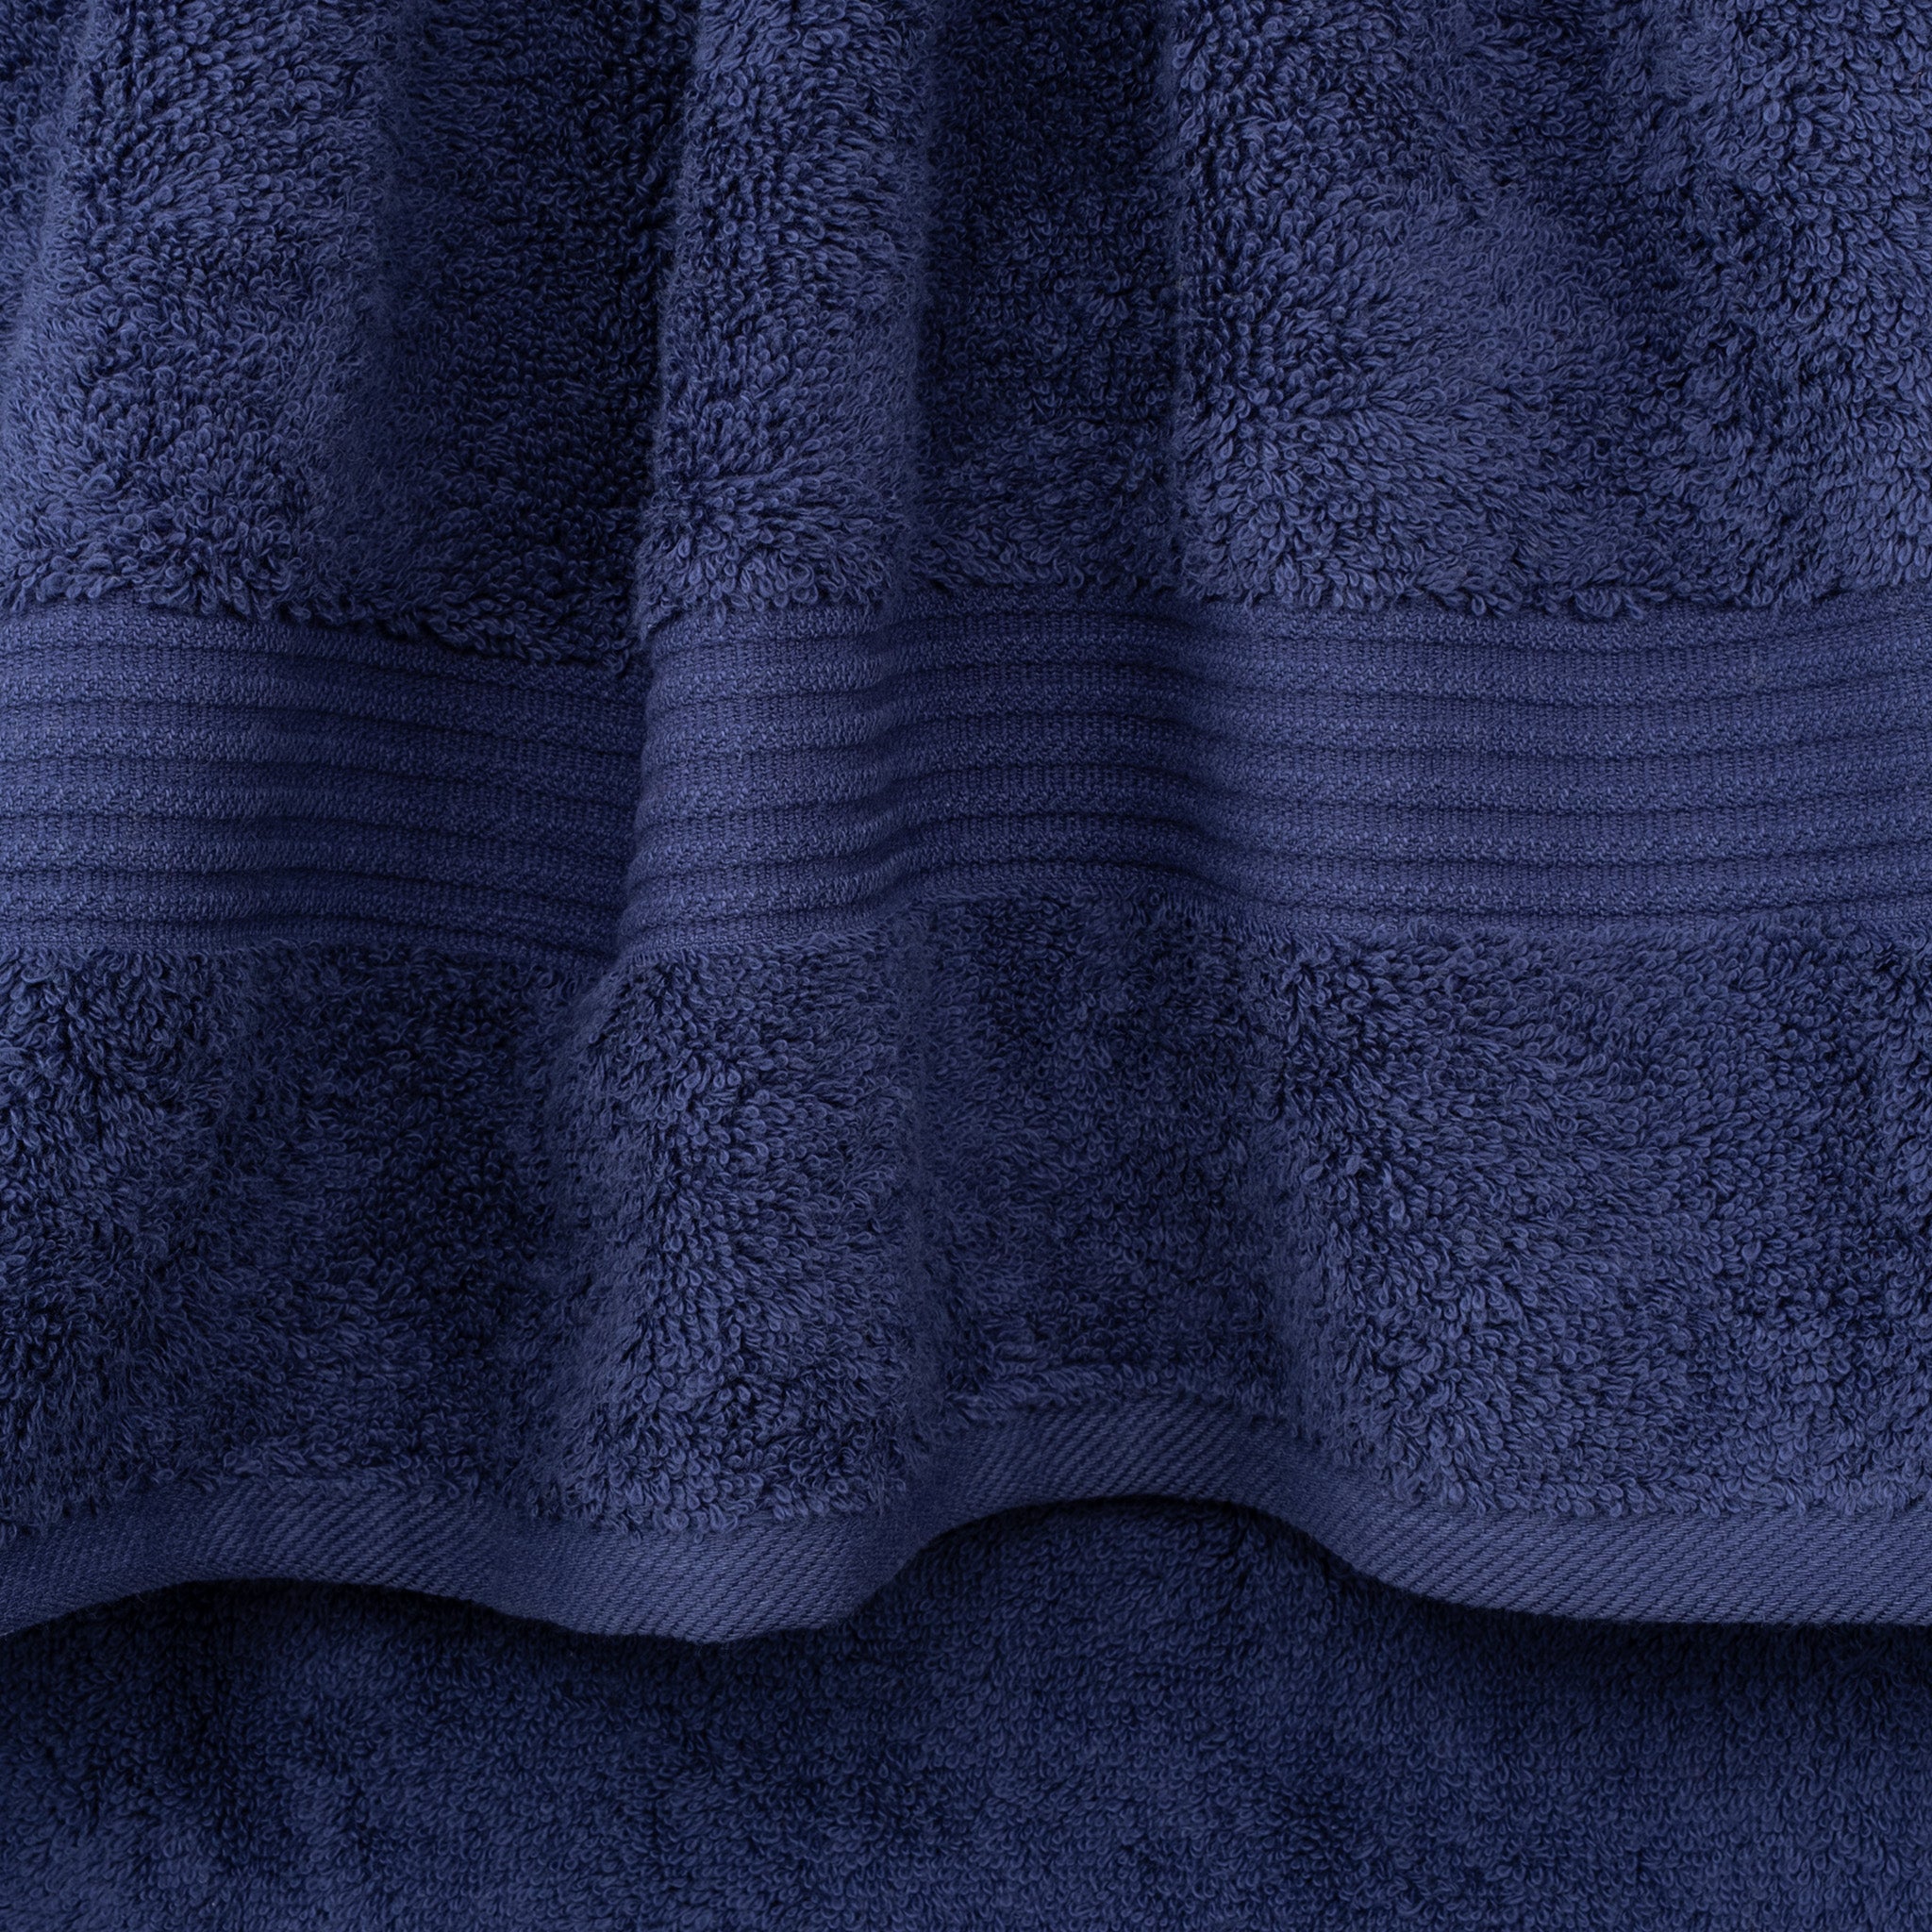 American Soft Linen Bekos 100% Cotton Turkish Towels, 4 Piece Washcloth Towel Set -navy-blue-04